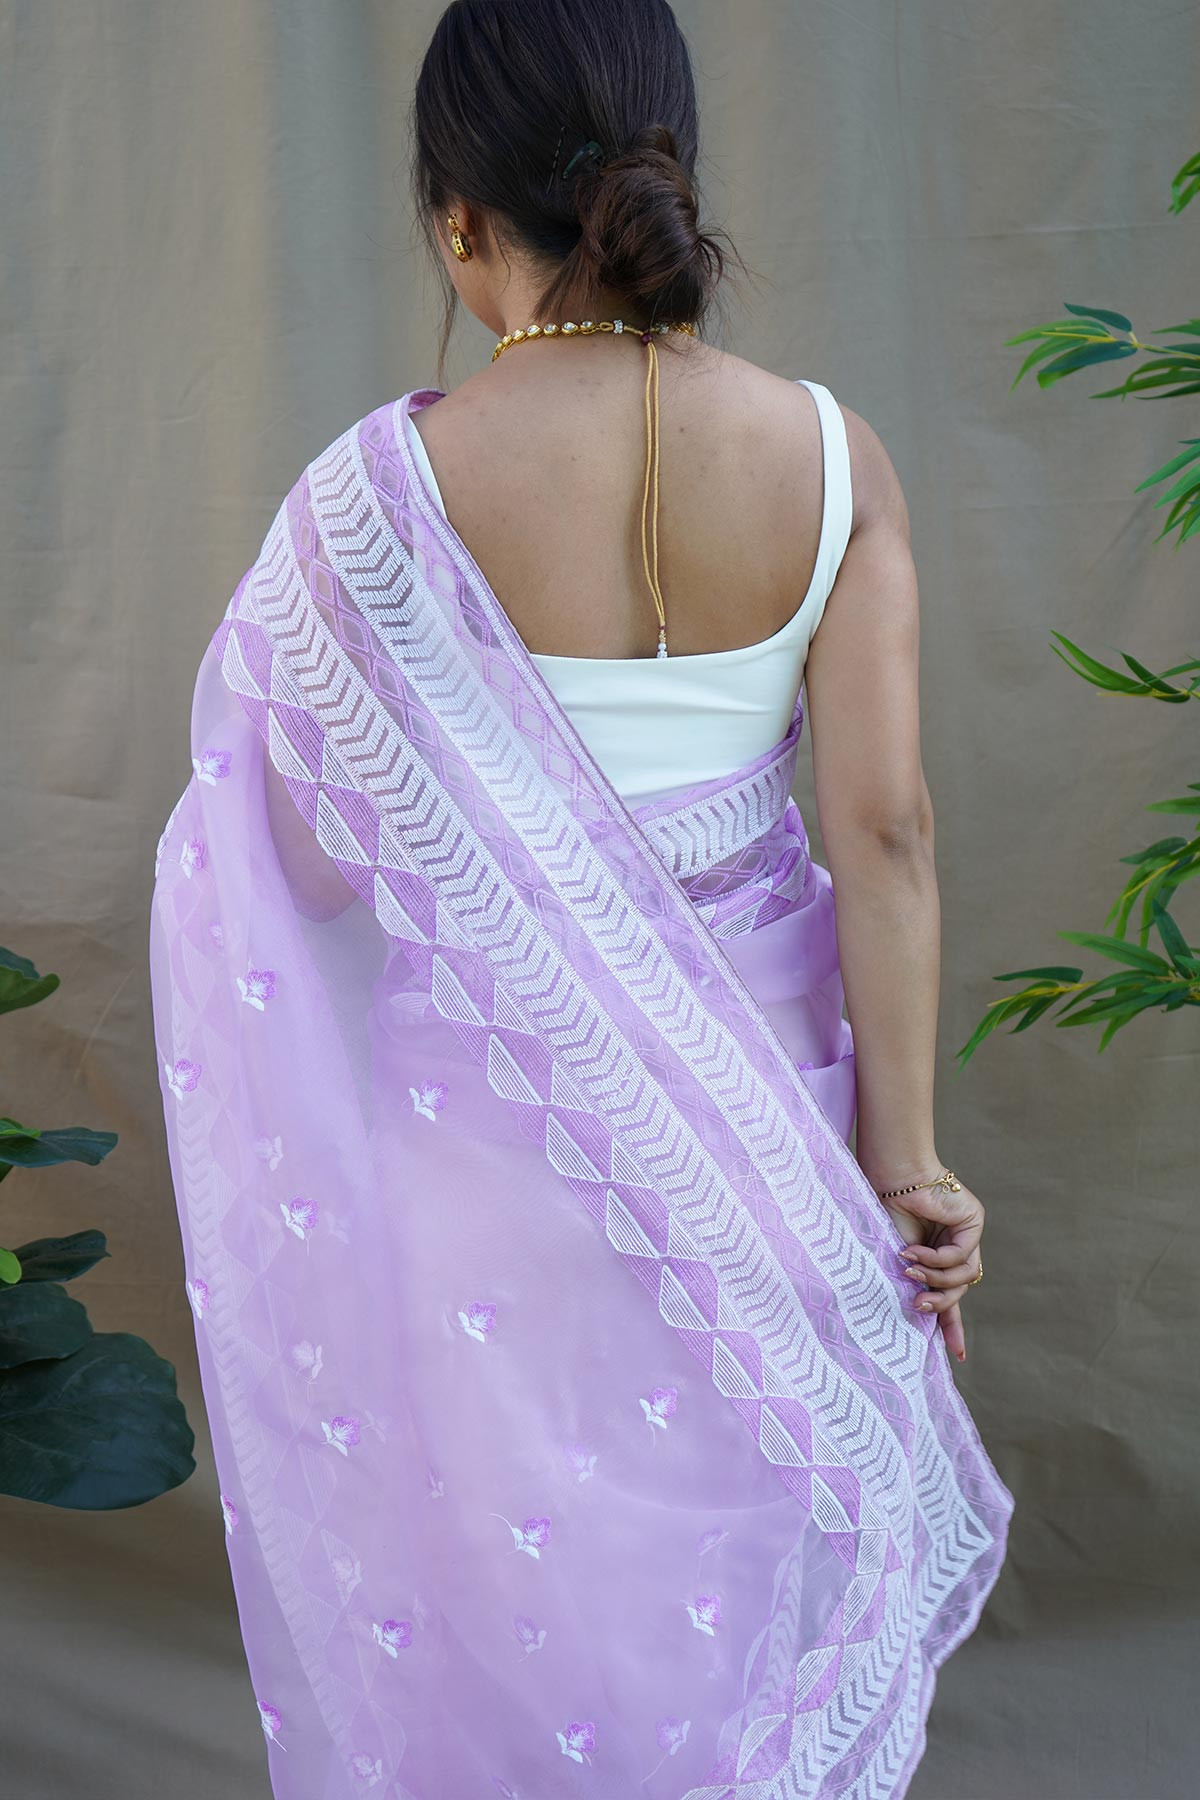 Soft Organza Designer saree with Embroidery Work Border - Lavender